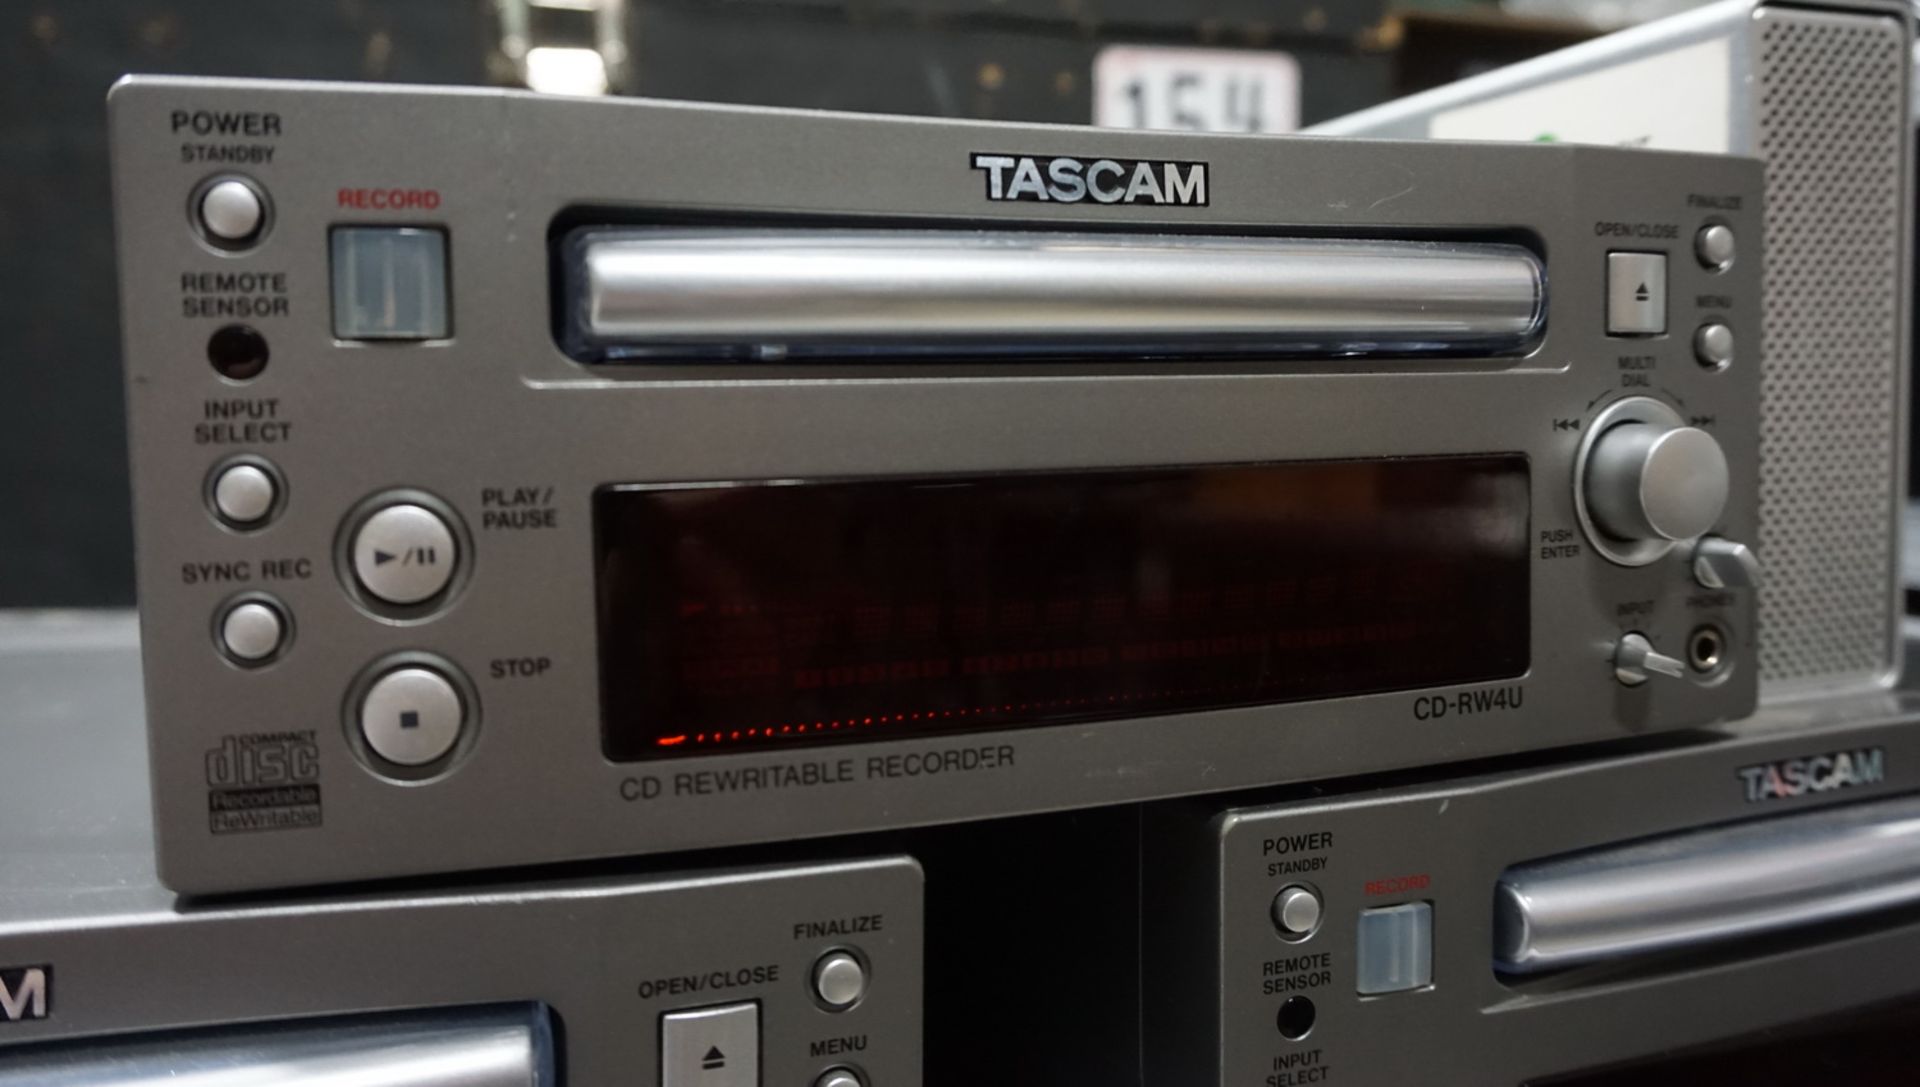 LOT - TASCAM CD-RW4U REWRITABLE RECORDERS (3 UNITS) - Image 2 of 2